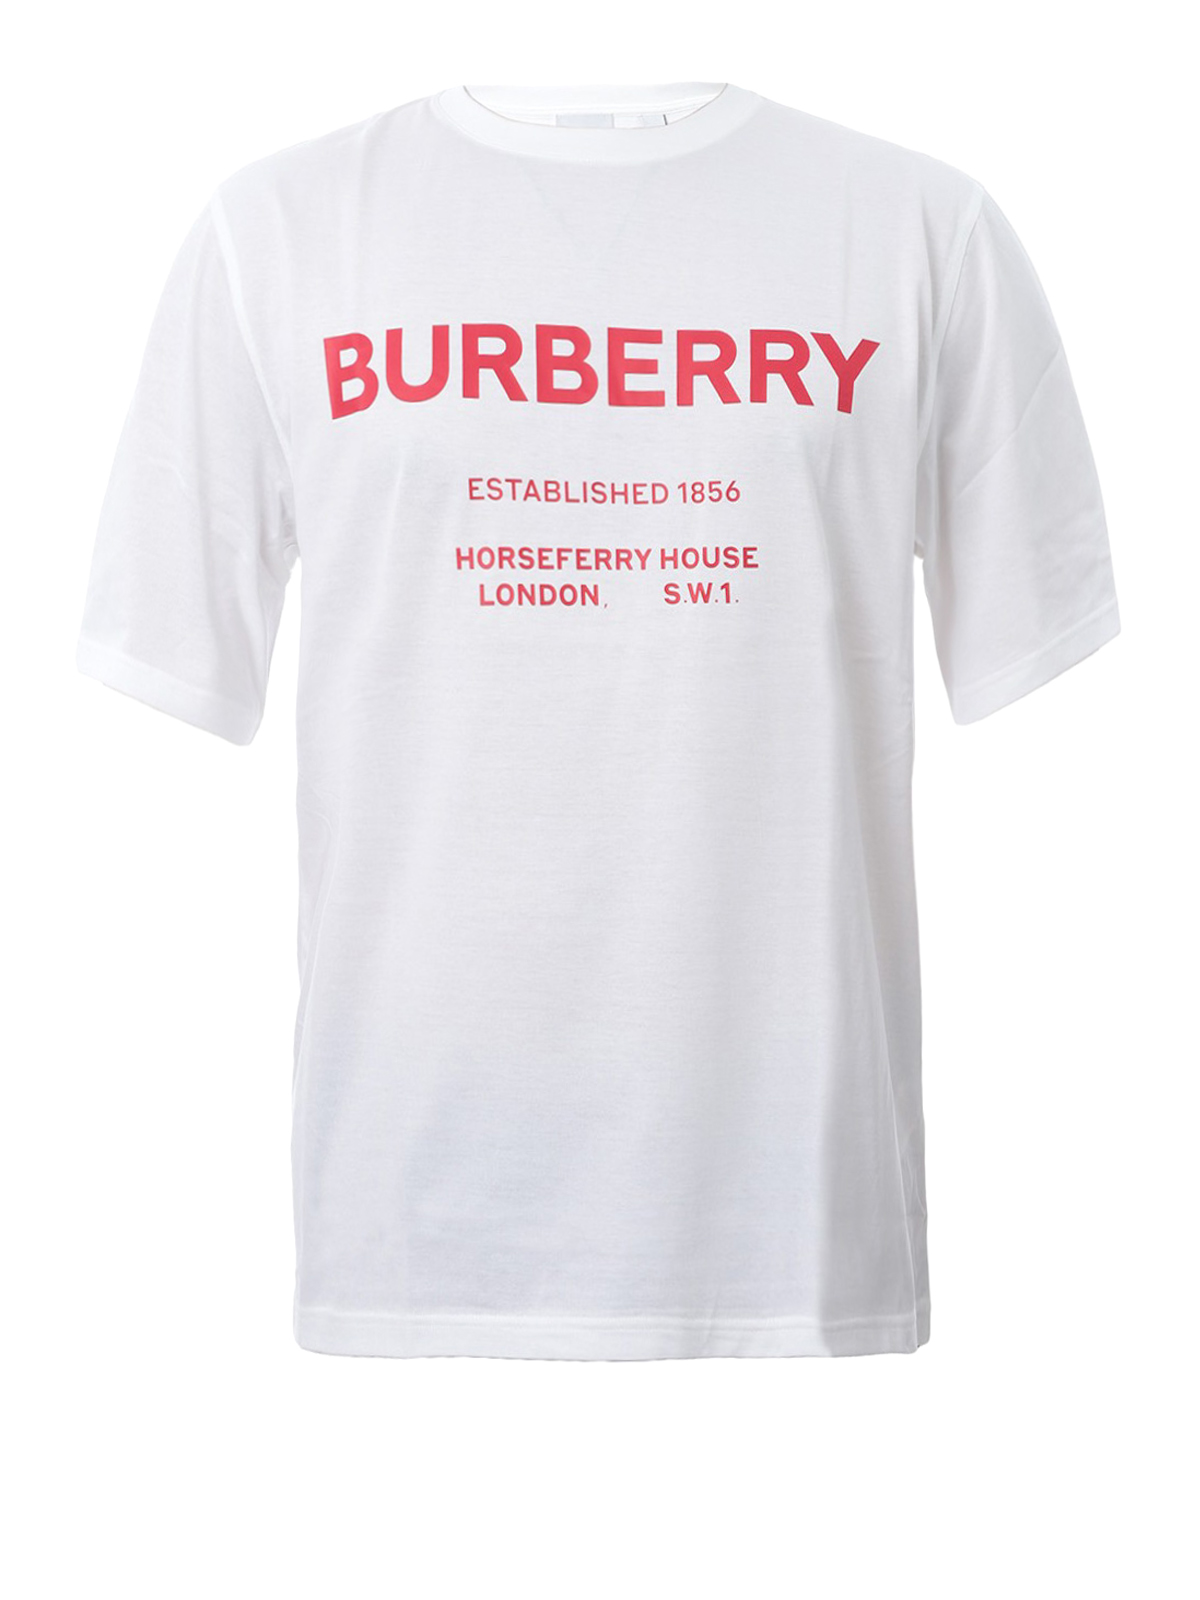 burberry horseferry shirt